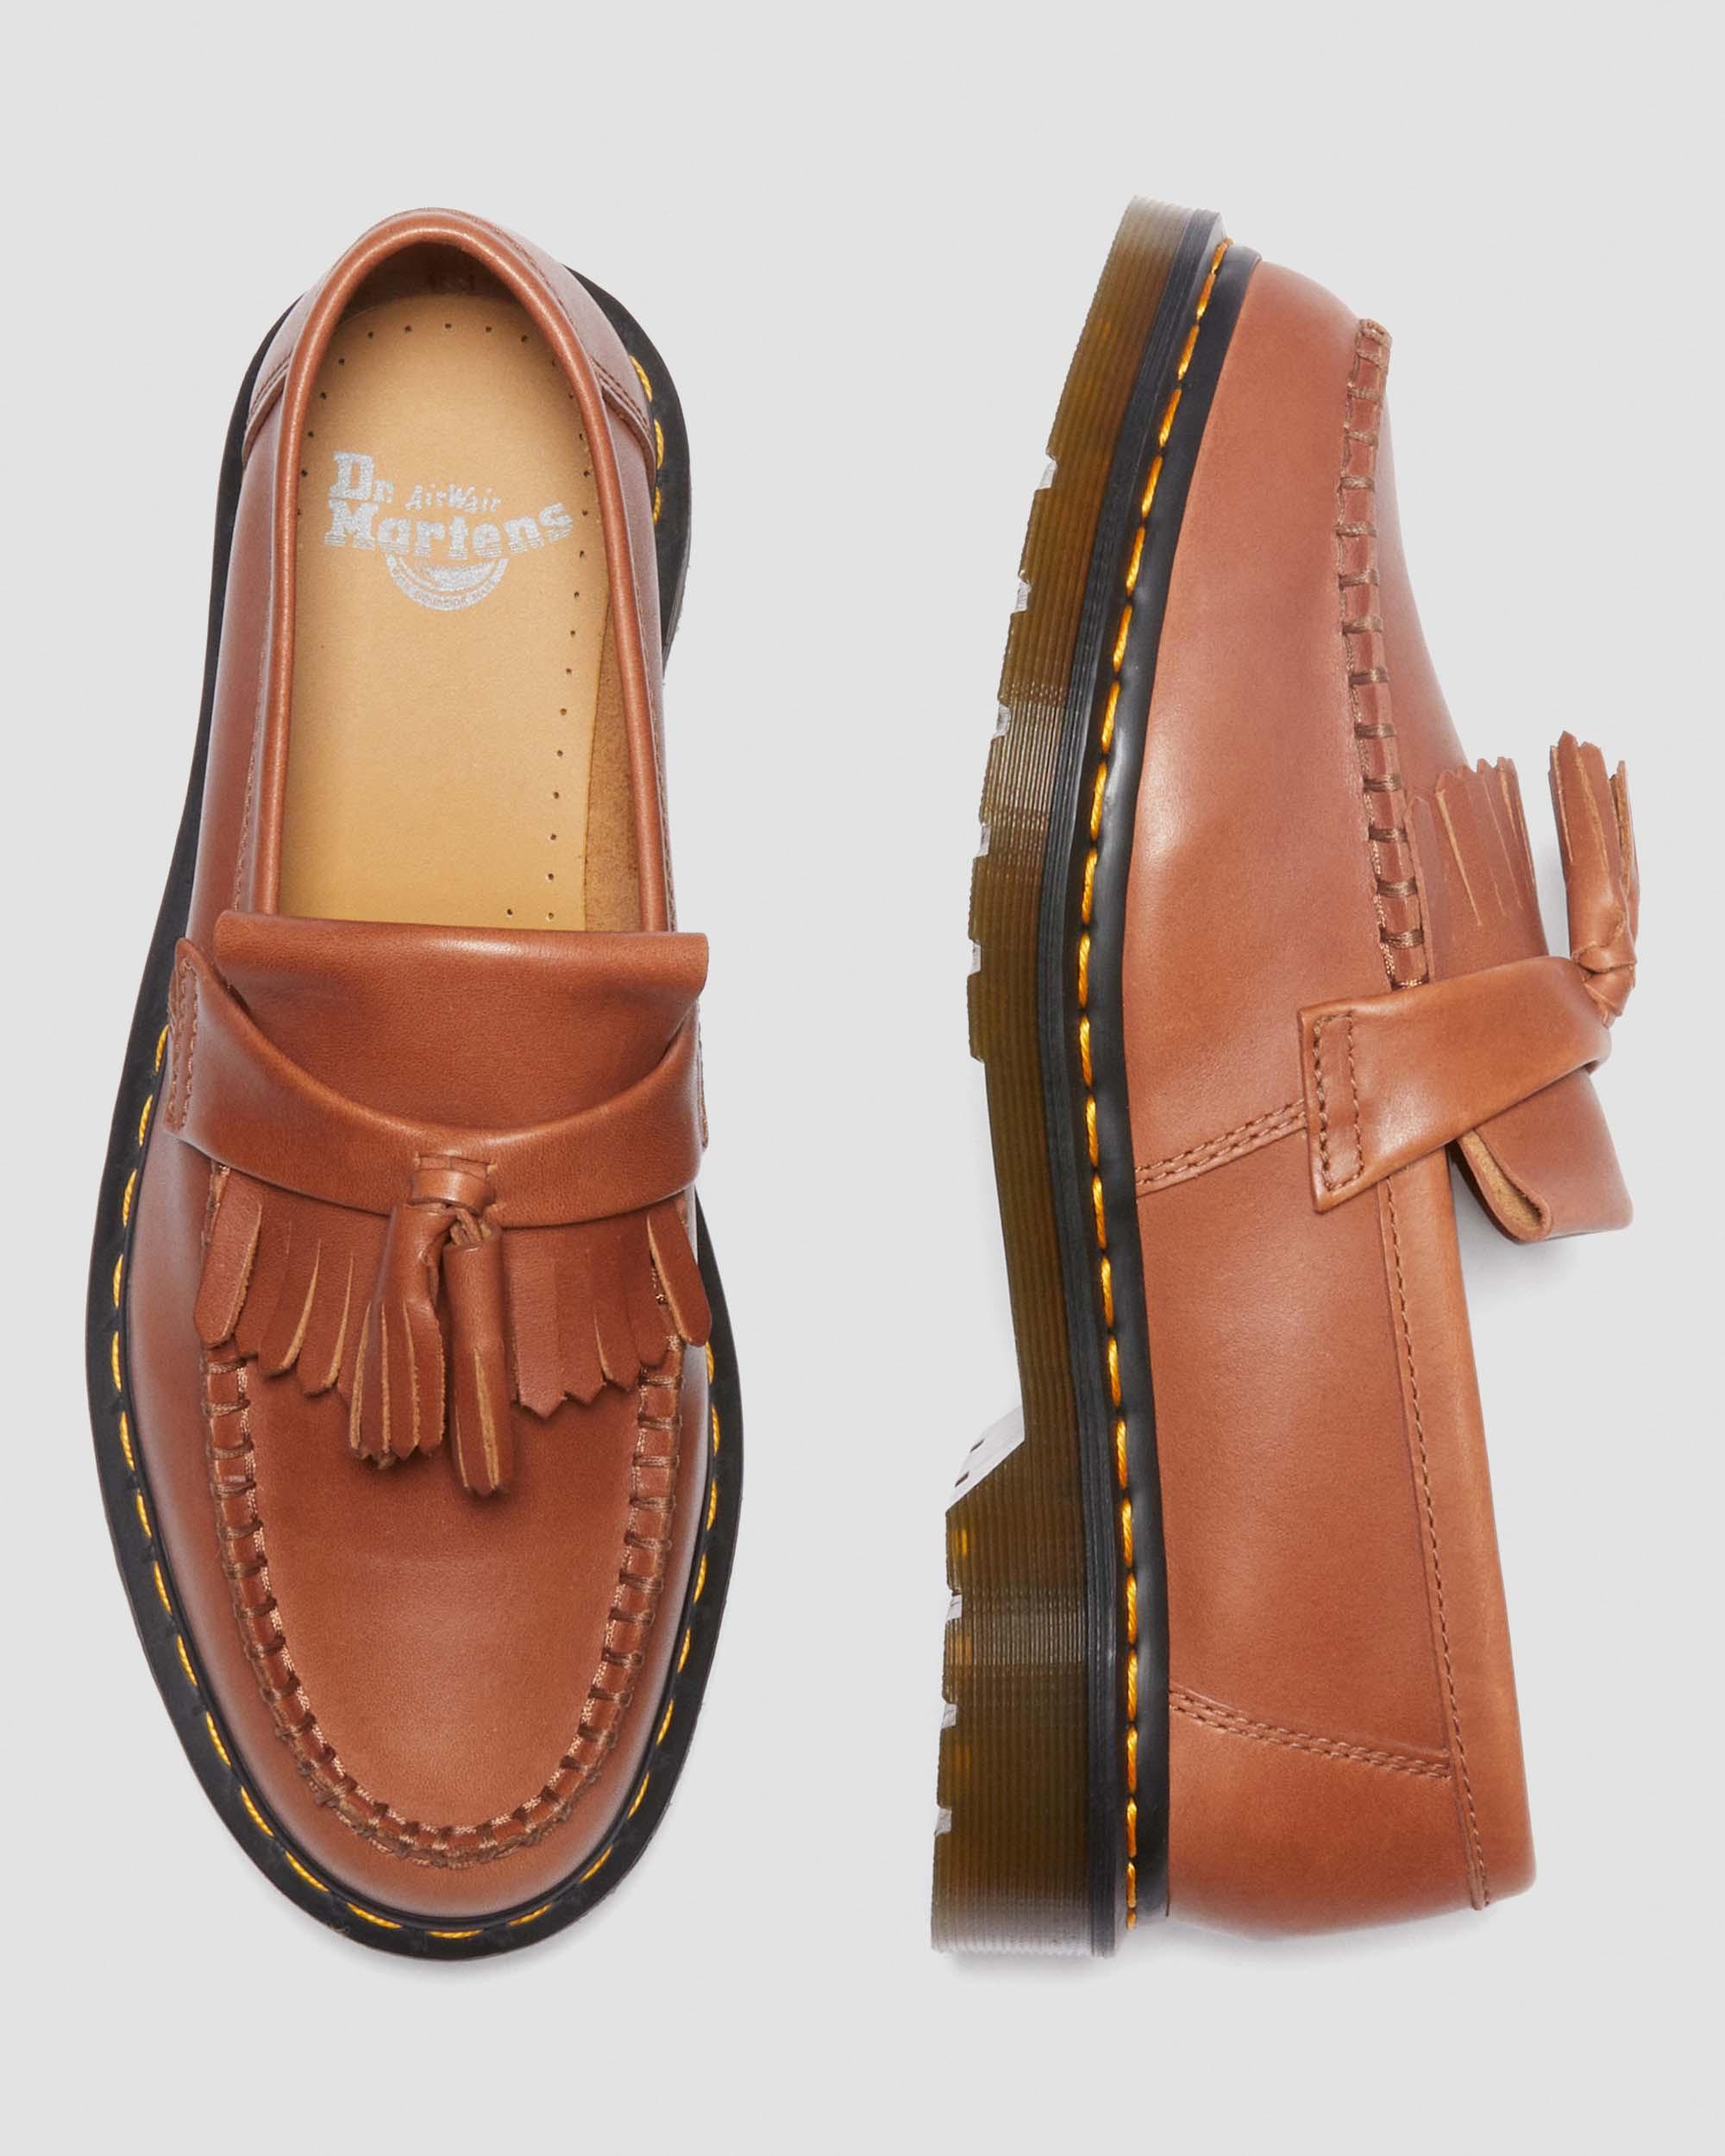 Adrian Carrara Leather Tassel Loafers in Saddle Tan